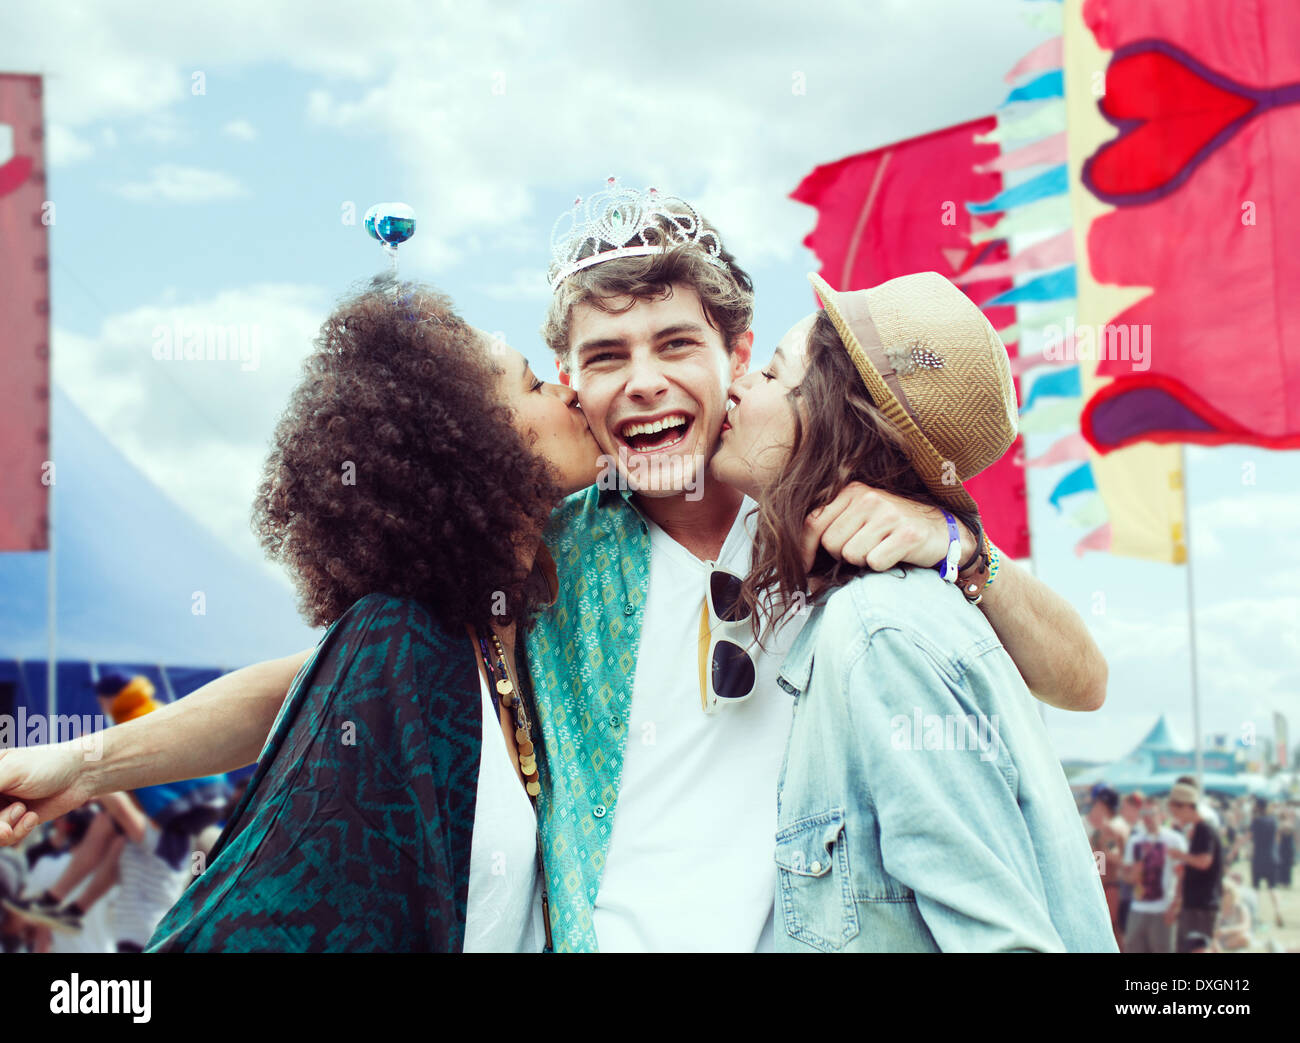 Women kissing manÍs cheek at music festival Stock Photo